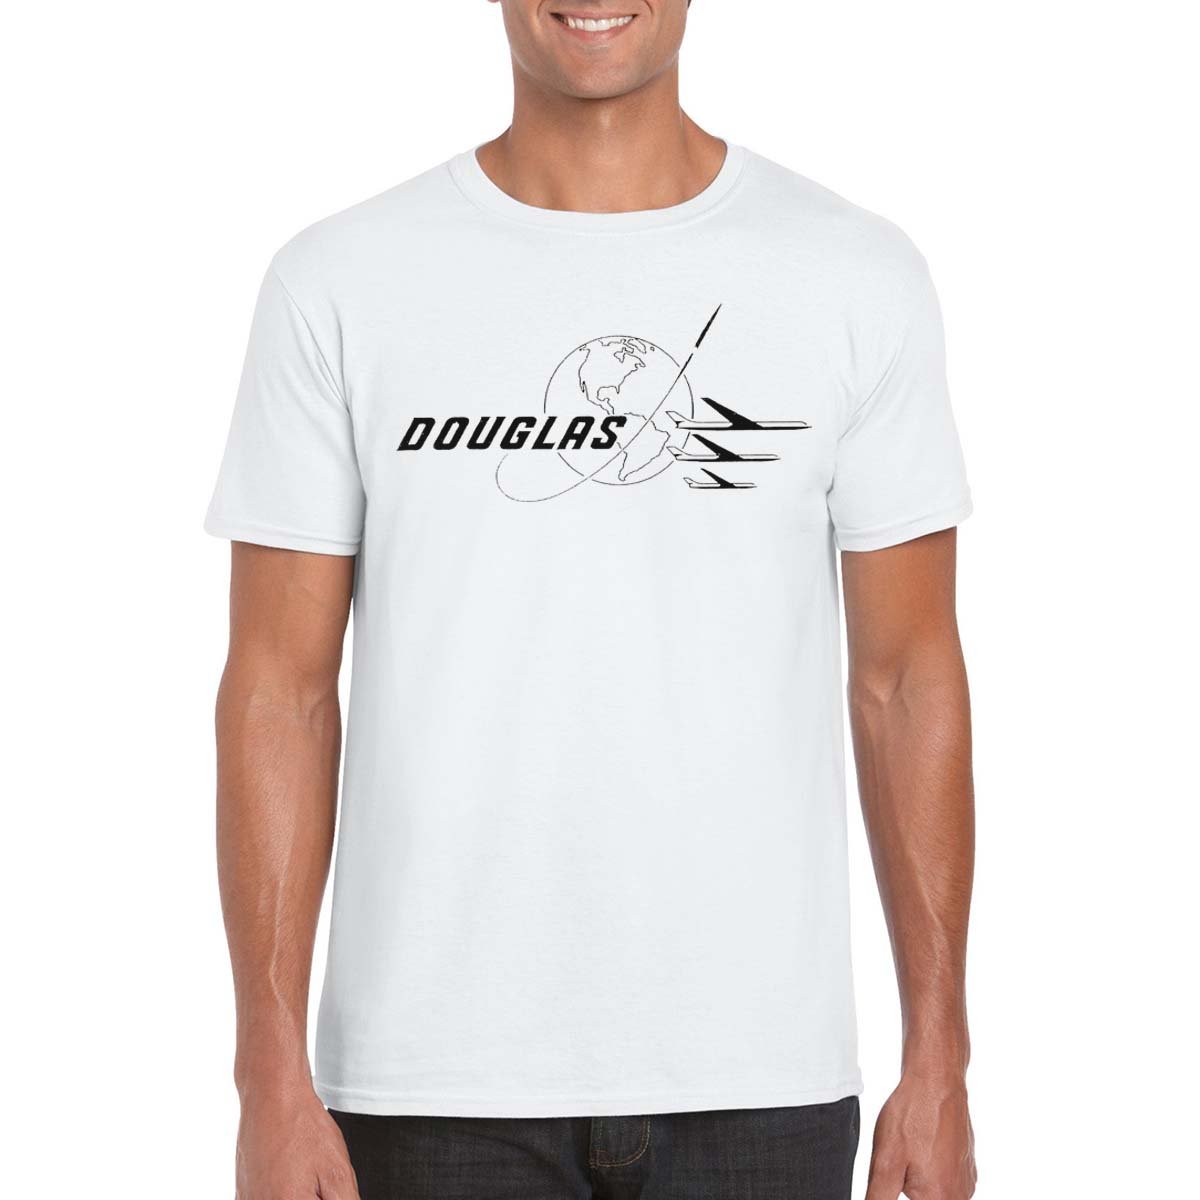 DOUGLAS RETRO Logo Unisex T-shirt